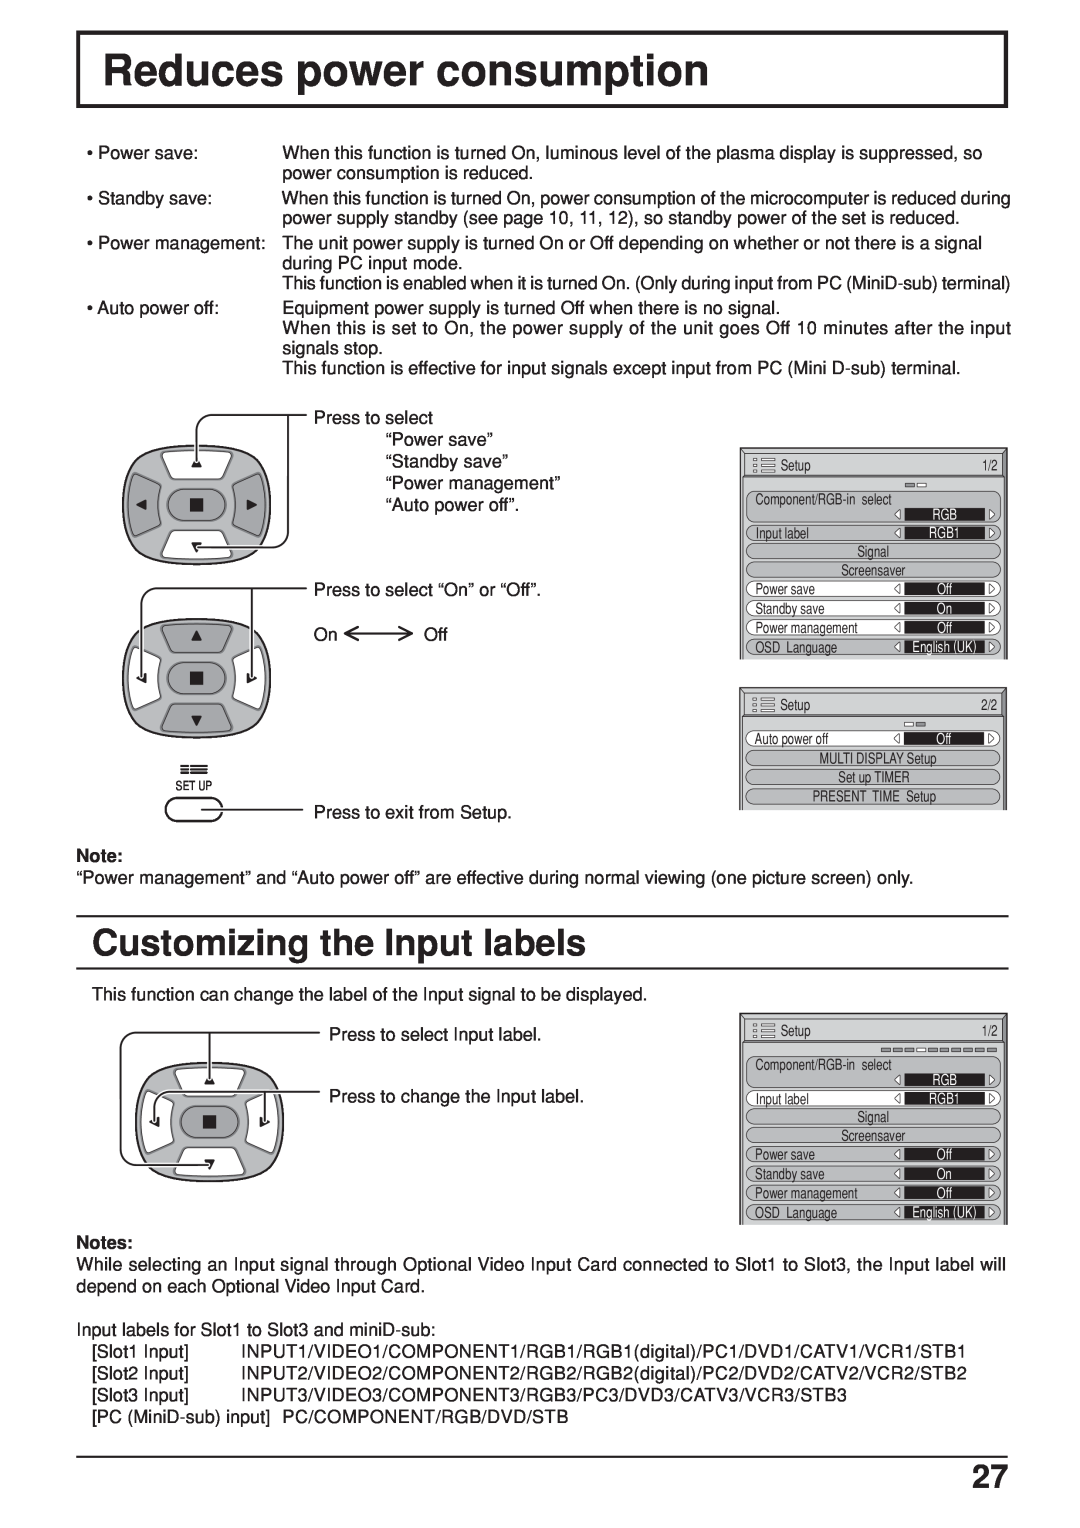 JVC GD V502U, GD-V422U manual Reduces power consumption, Customizing the Input labels 